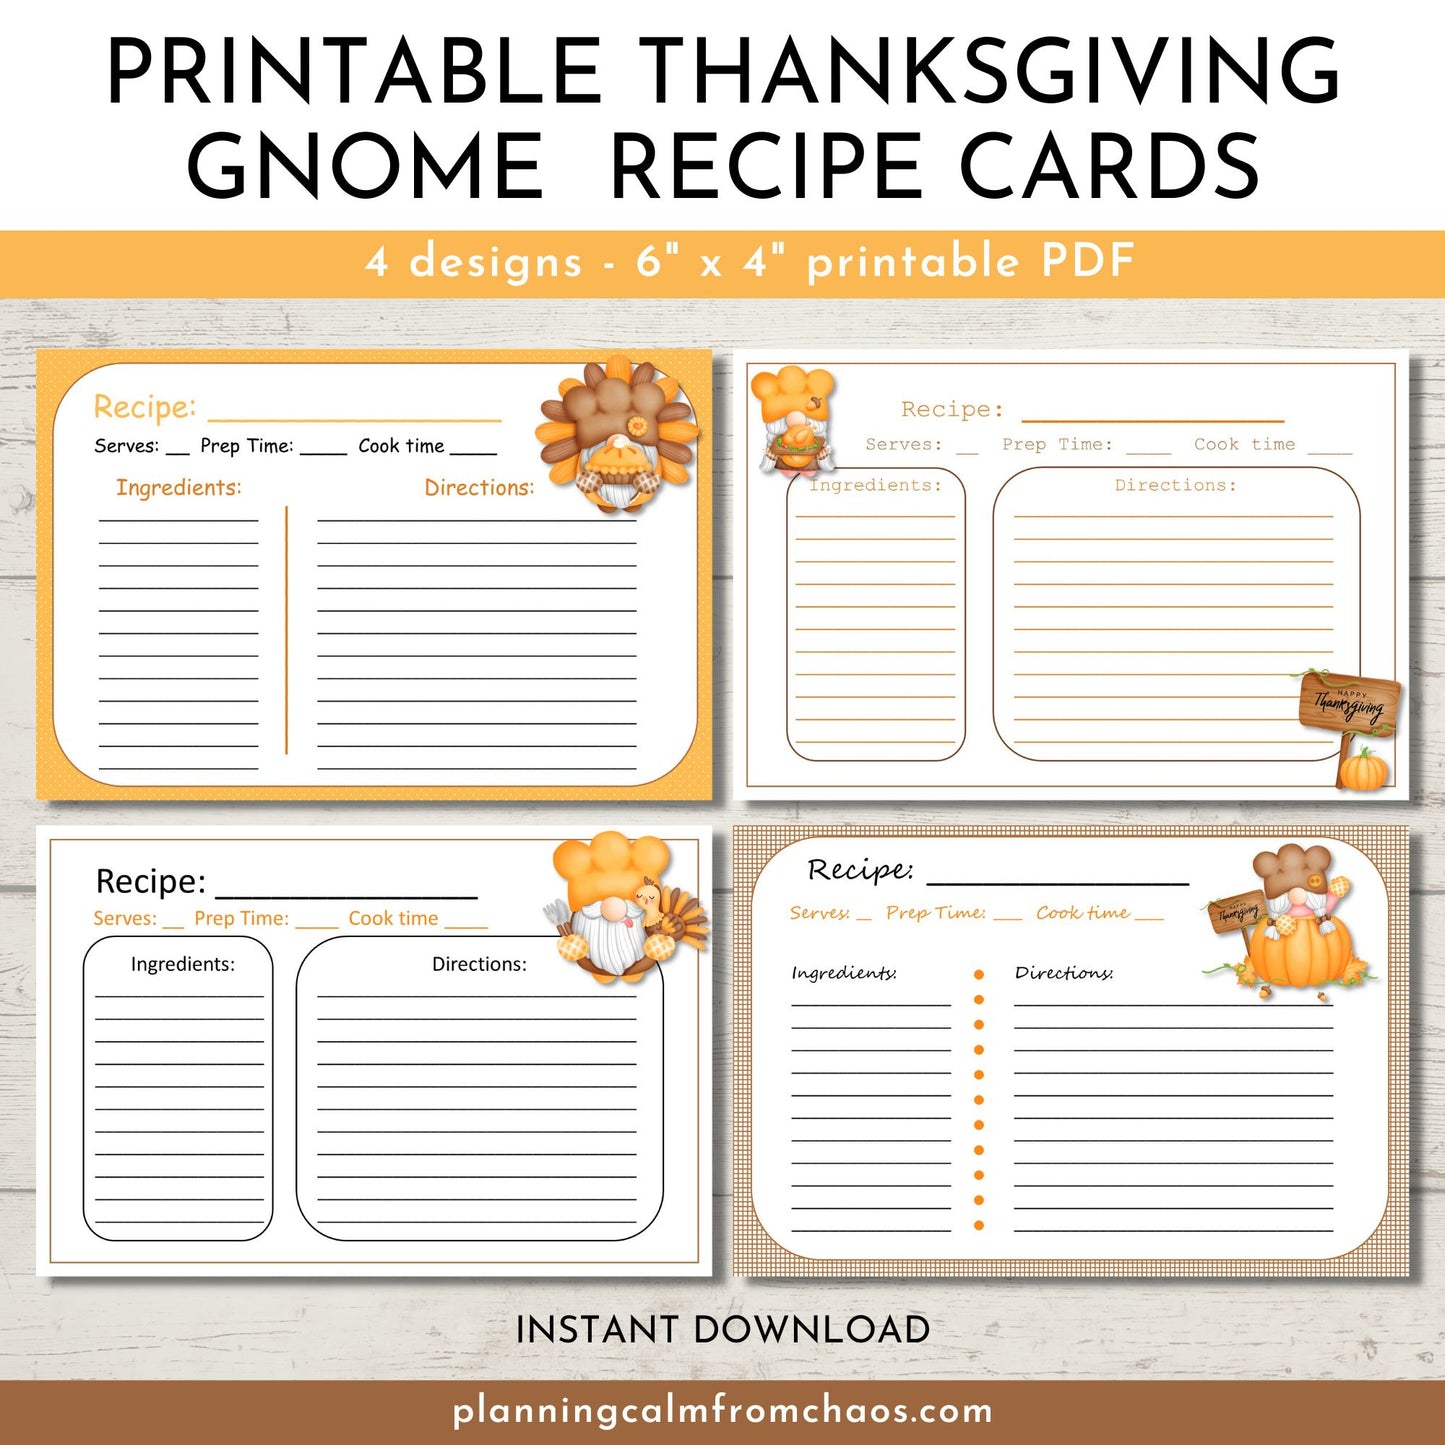 Printable thanksgiving gnome recipe cards